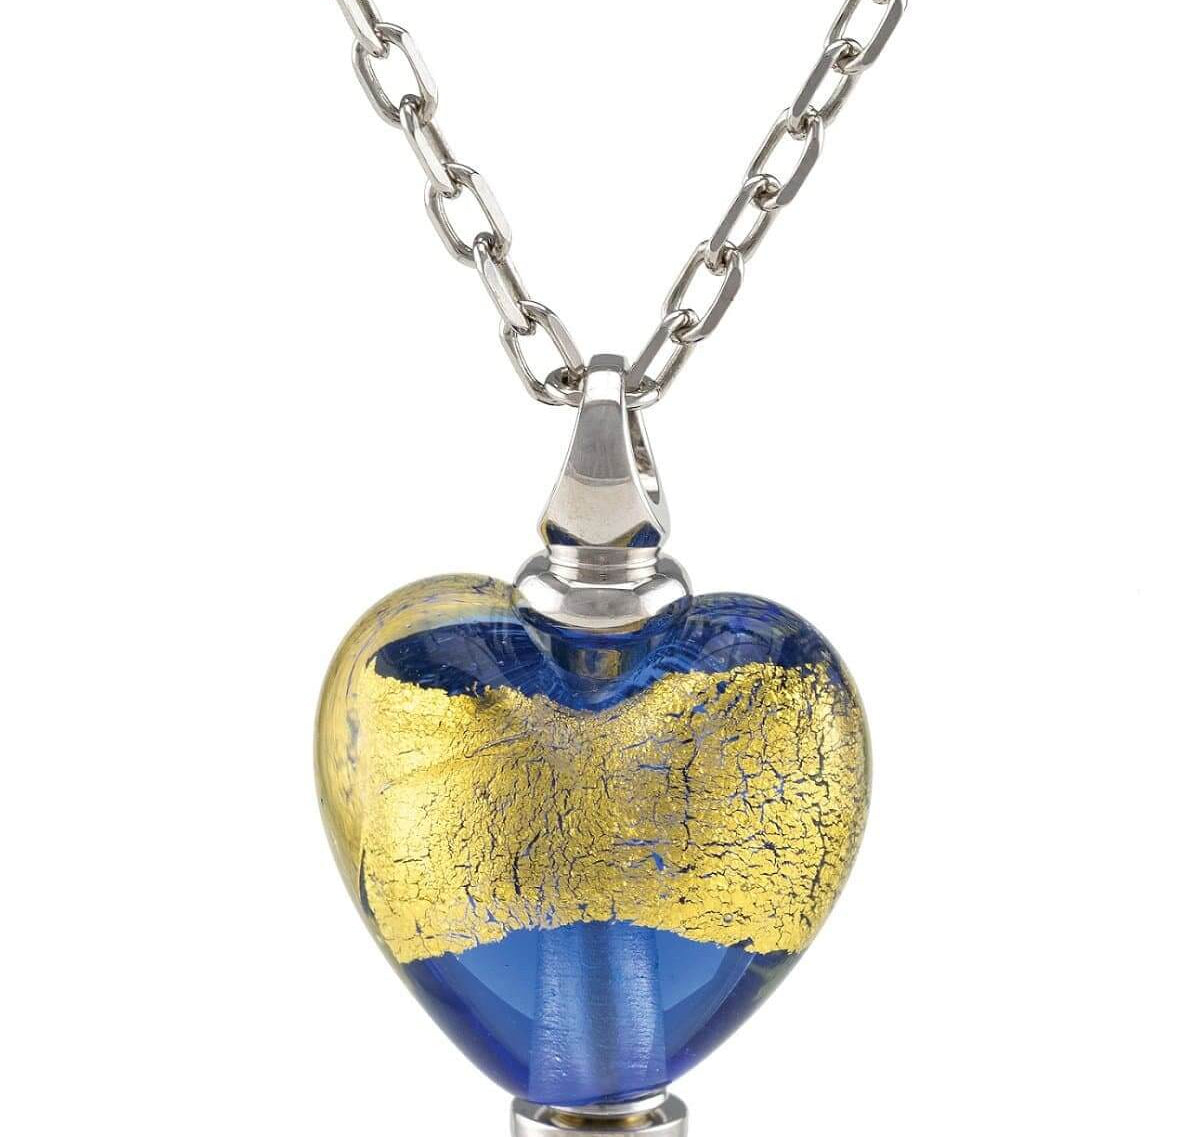 Cara Keepsakes Murano Glass Heart Urn - 'Wrapped in Glory'